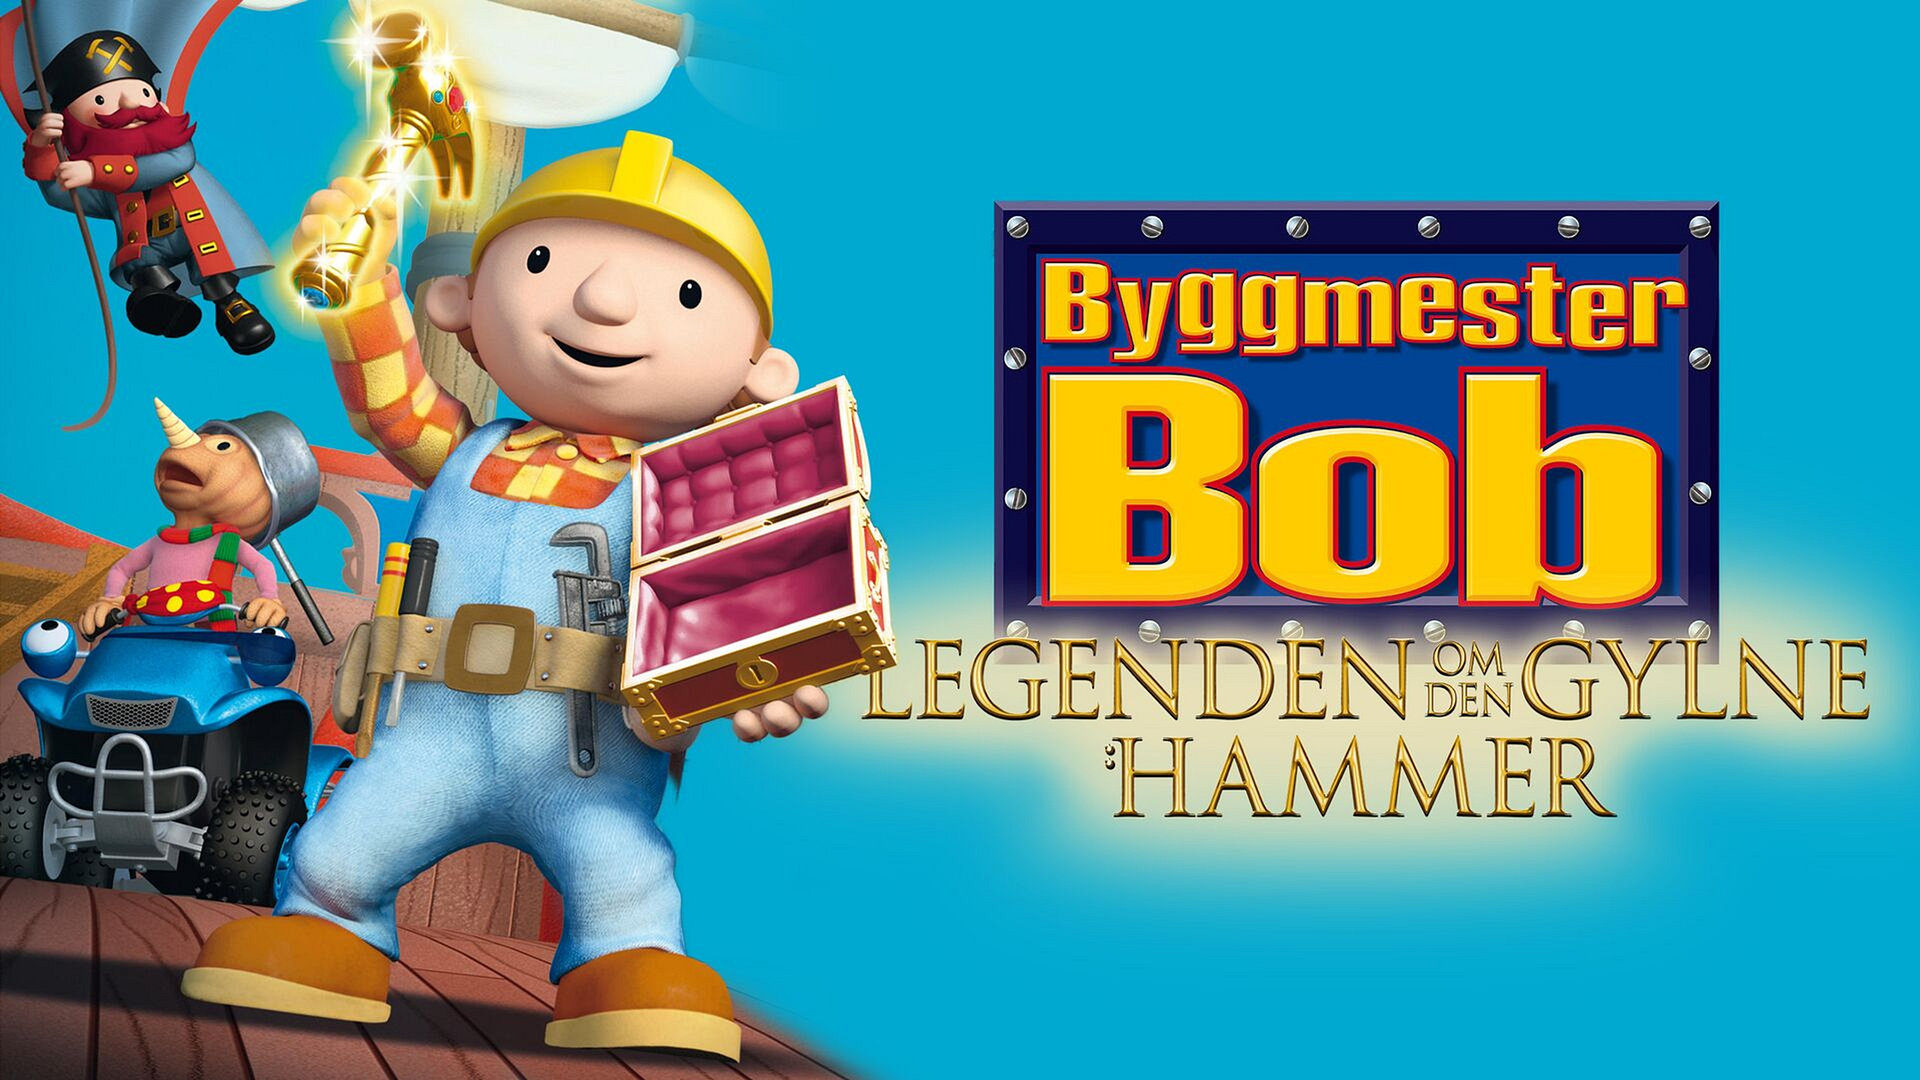 Byggmester Bob - Legenden om den gylne hammer (Norsk tale)